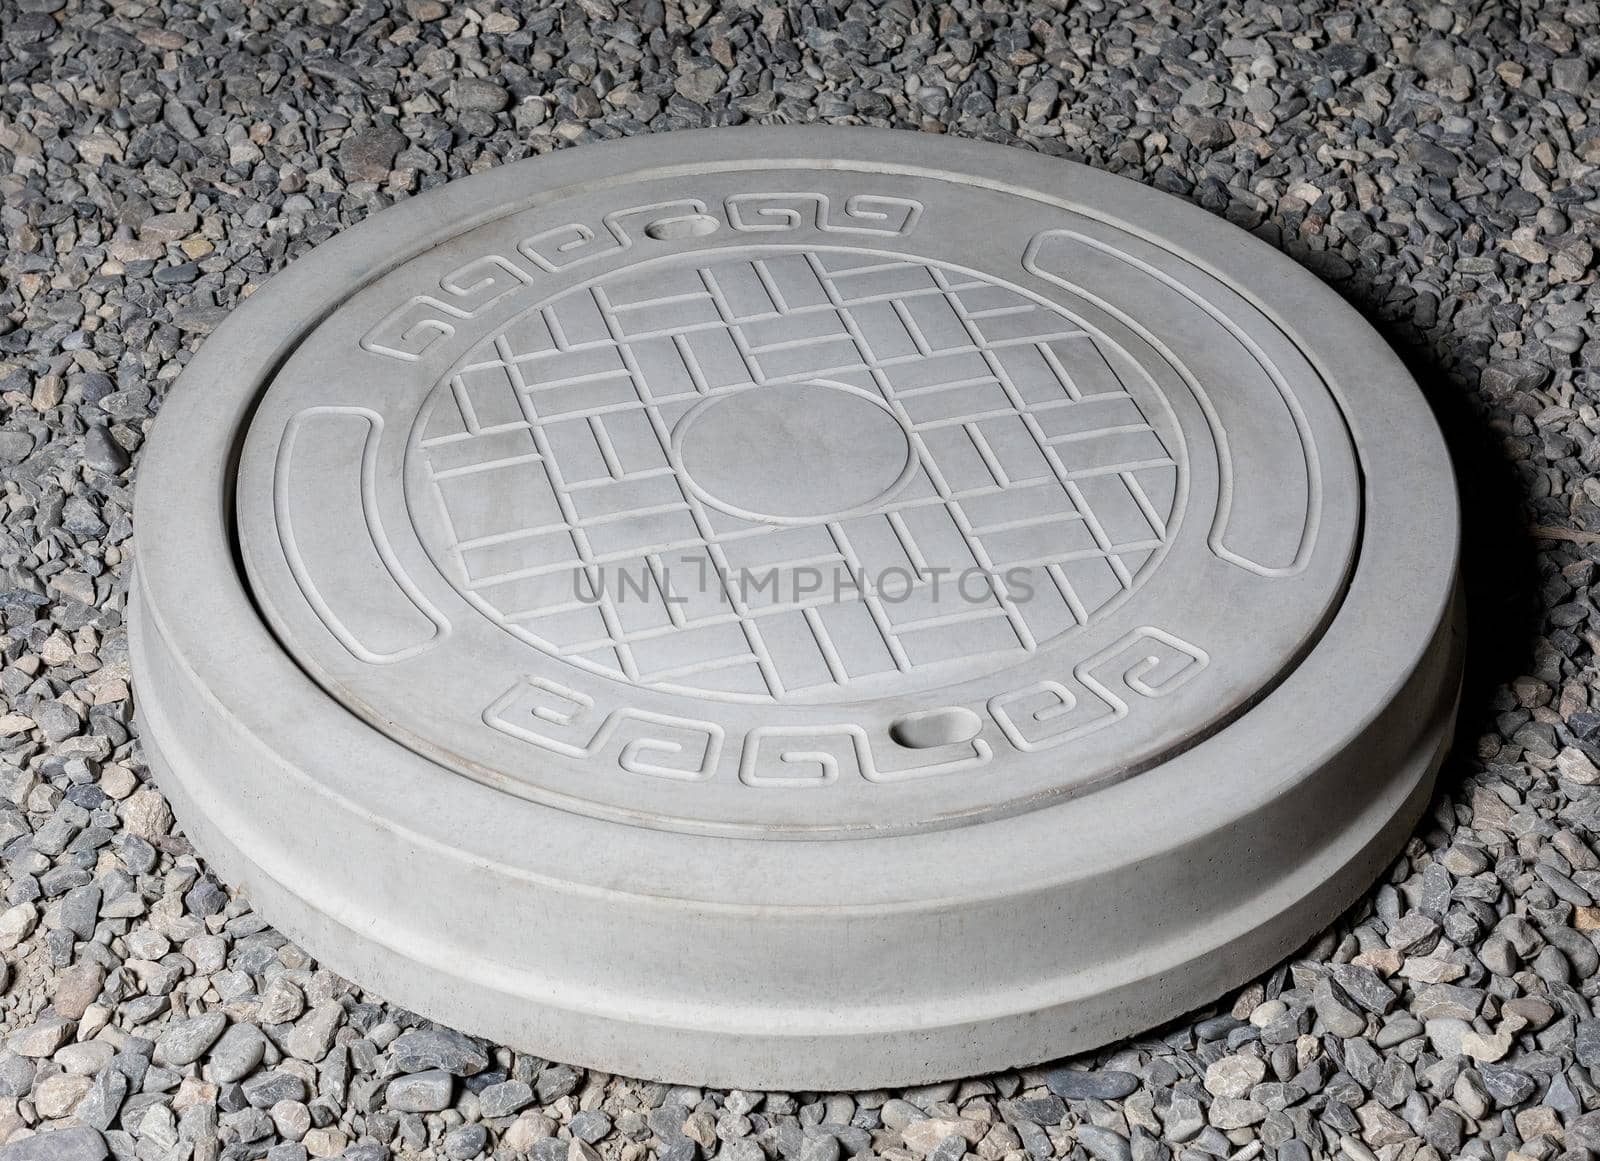 Plaster graceful stone manhole shape on the ground by ferhad